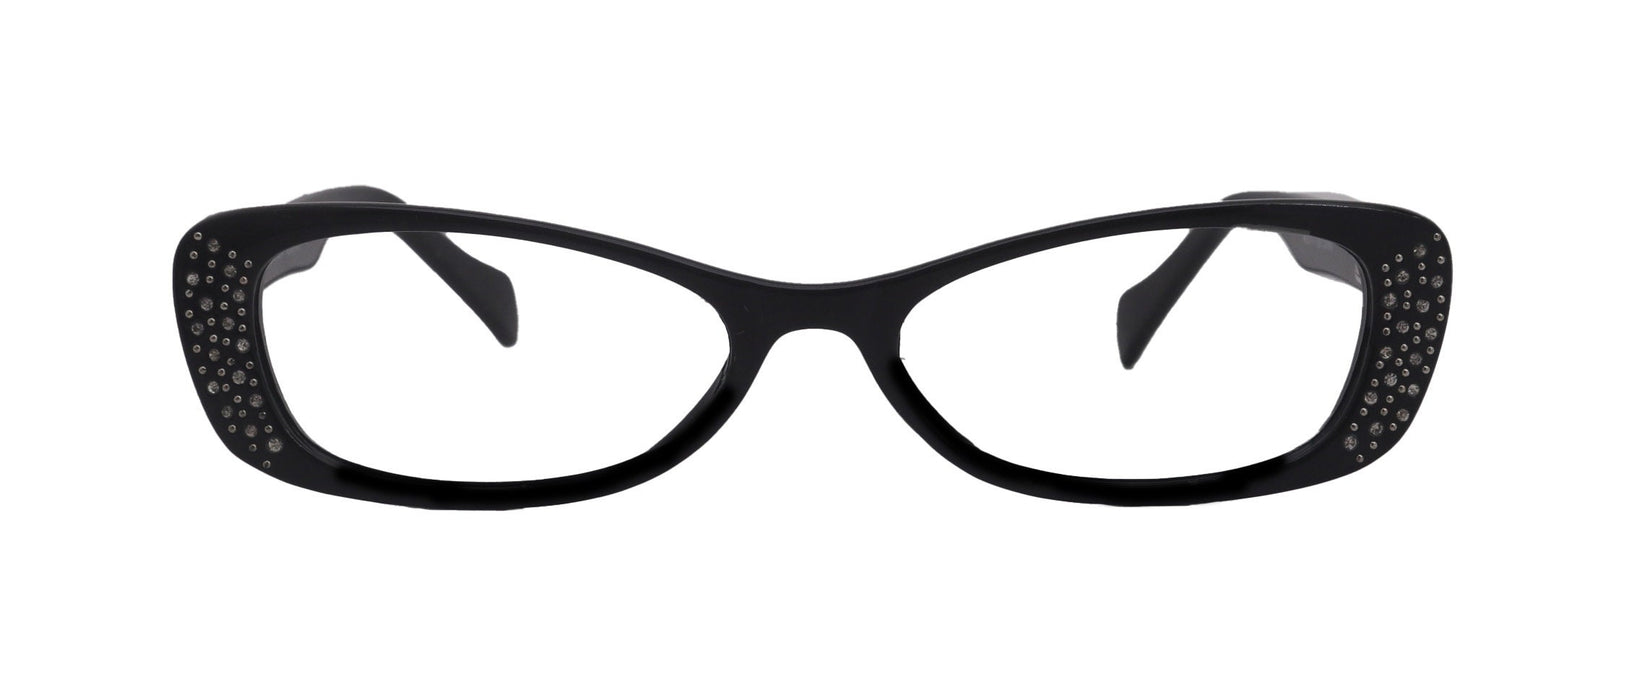 Premium Reading Glasses High End Reading Glass, Small Frame Black +1.25 to +3.00 magnifying glasses, Cat Eye. optical Frames